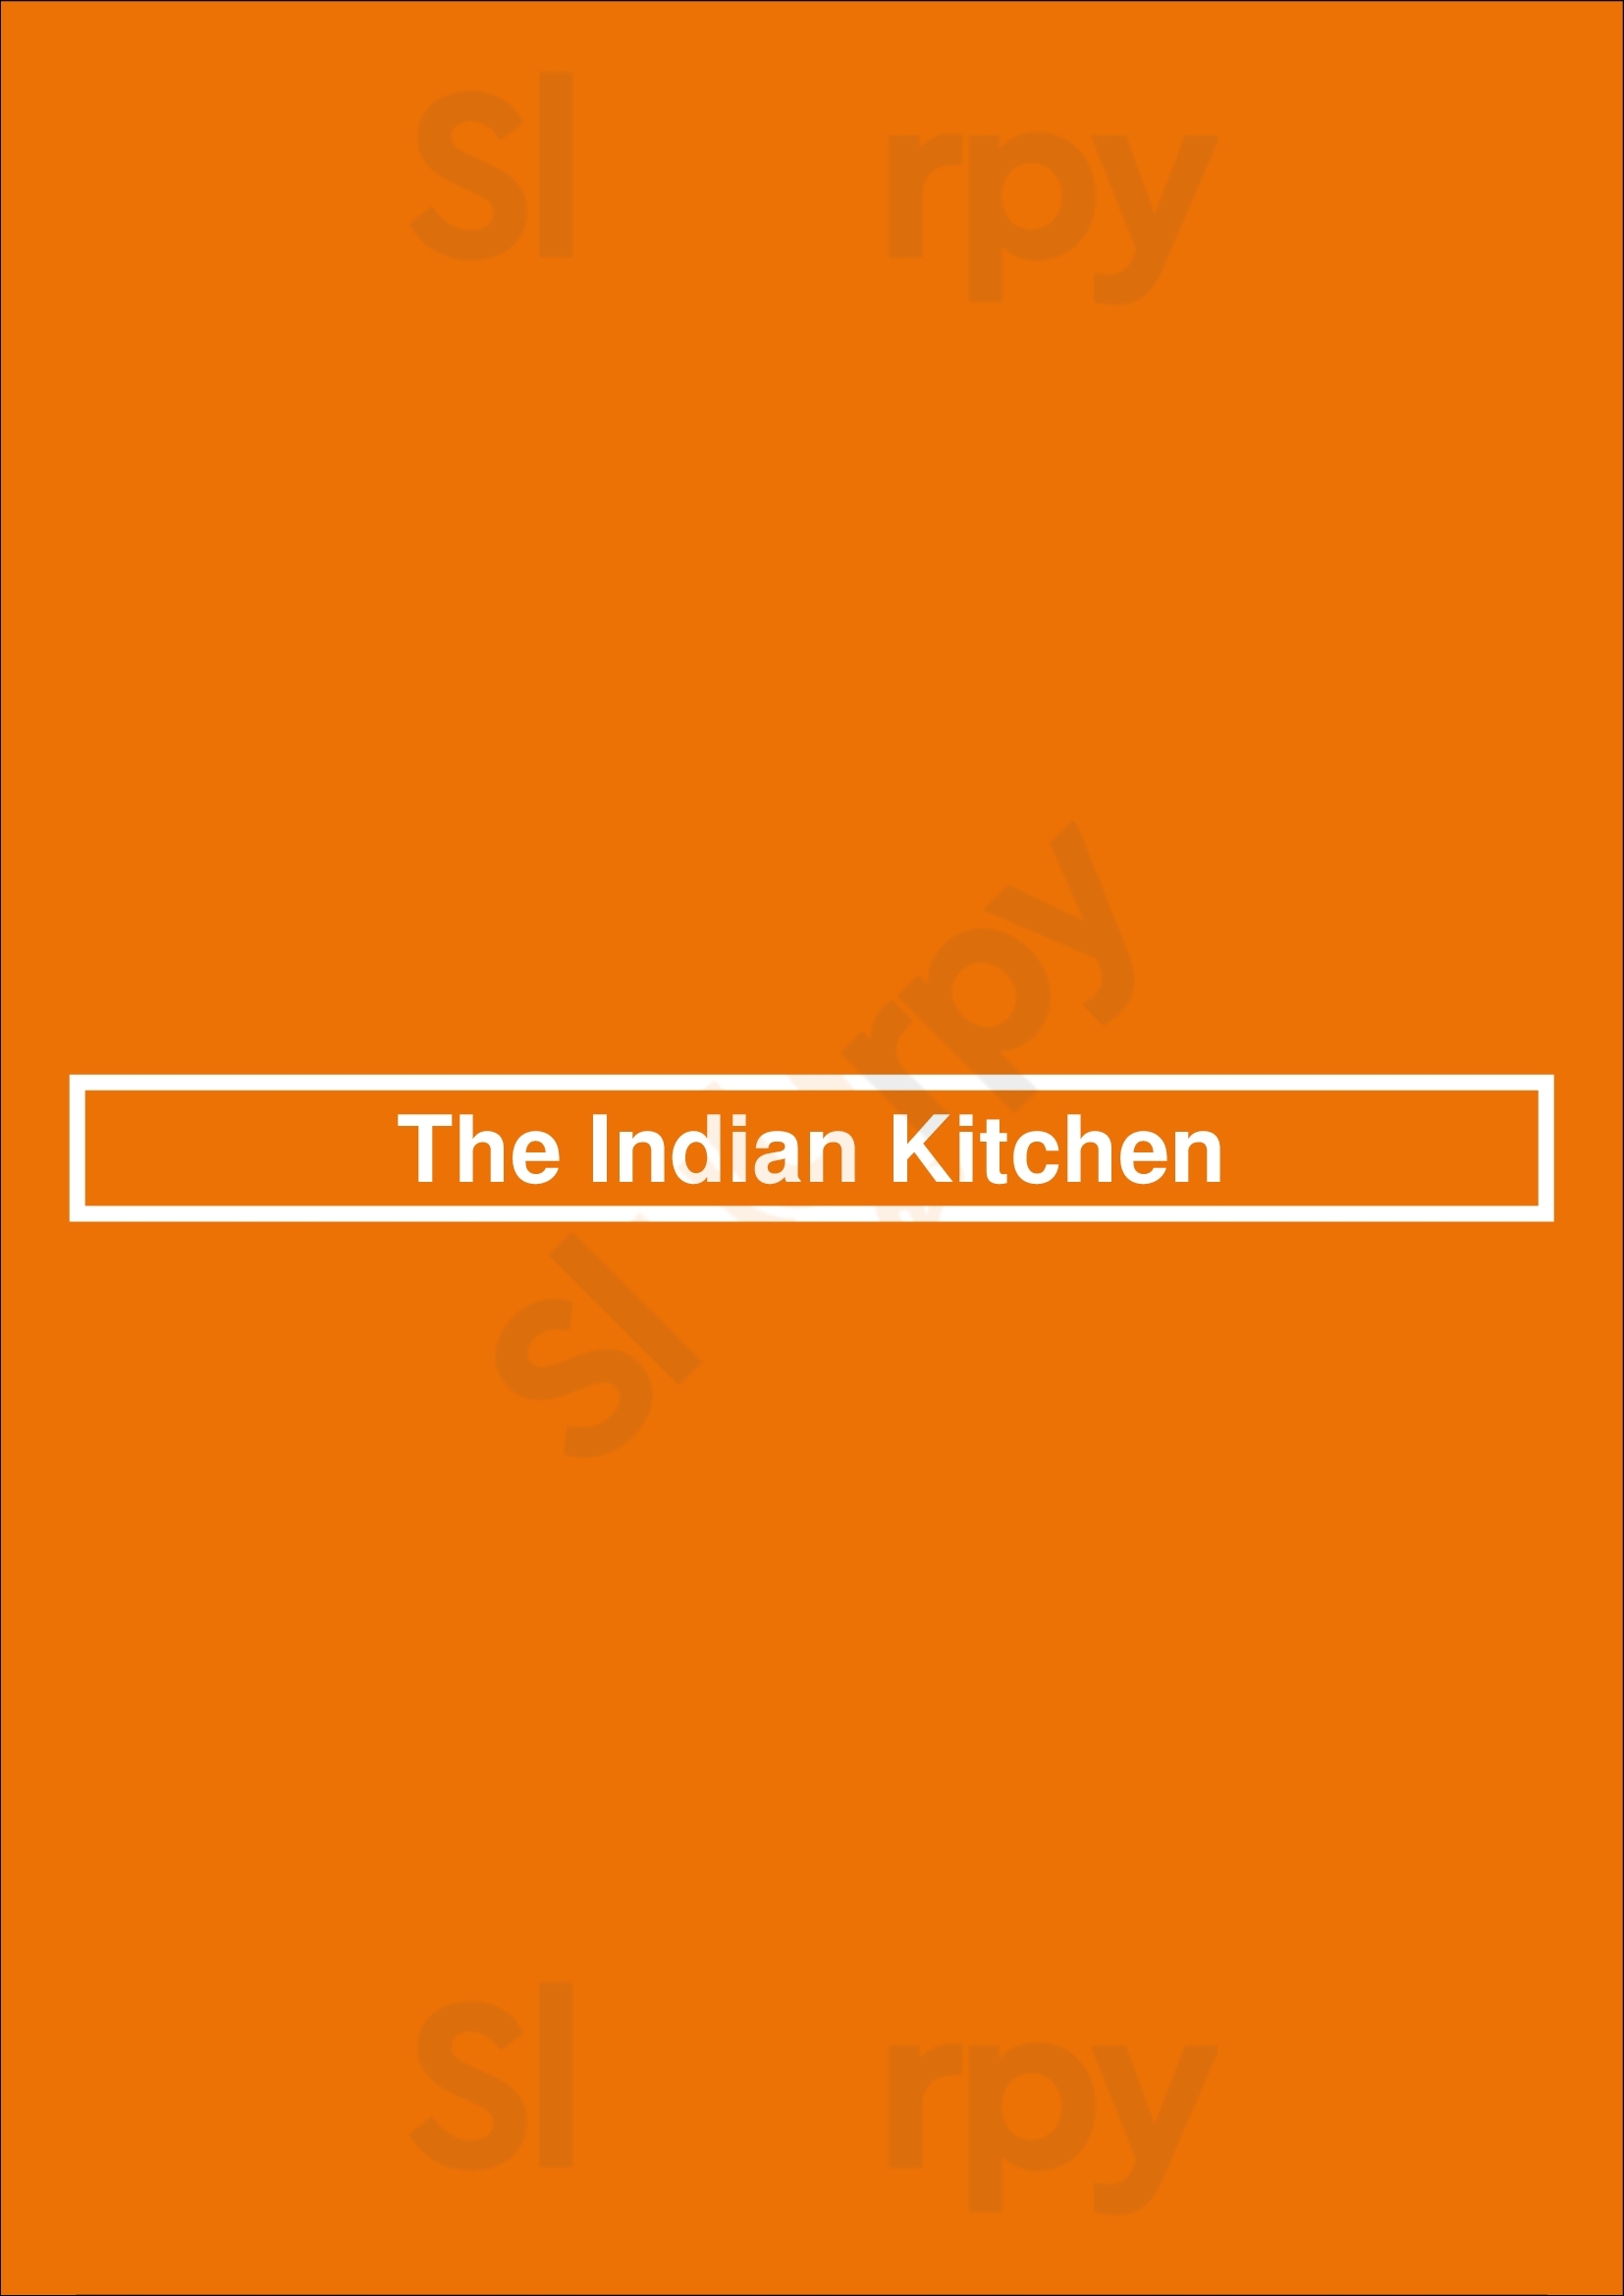 The Indian Kitchen Amstelveen Menu - 1